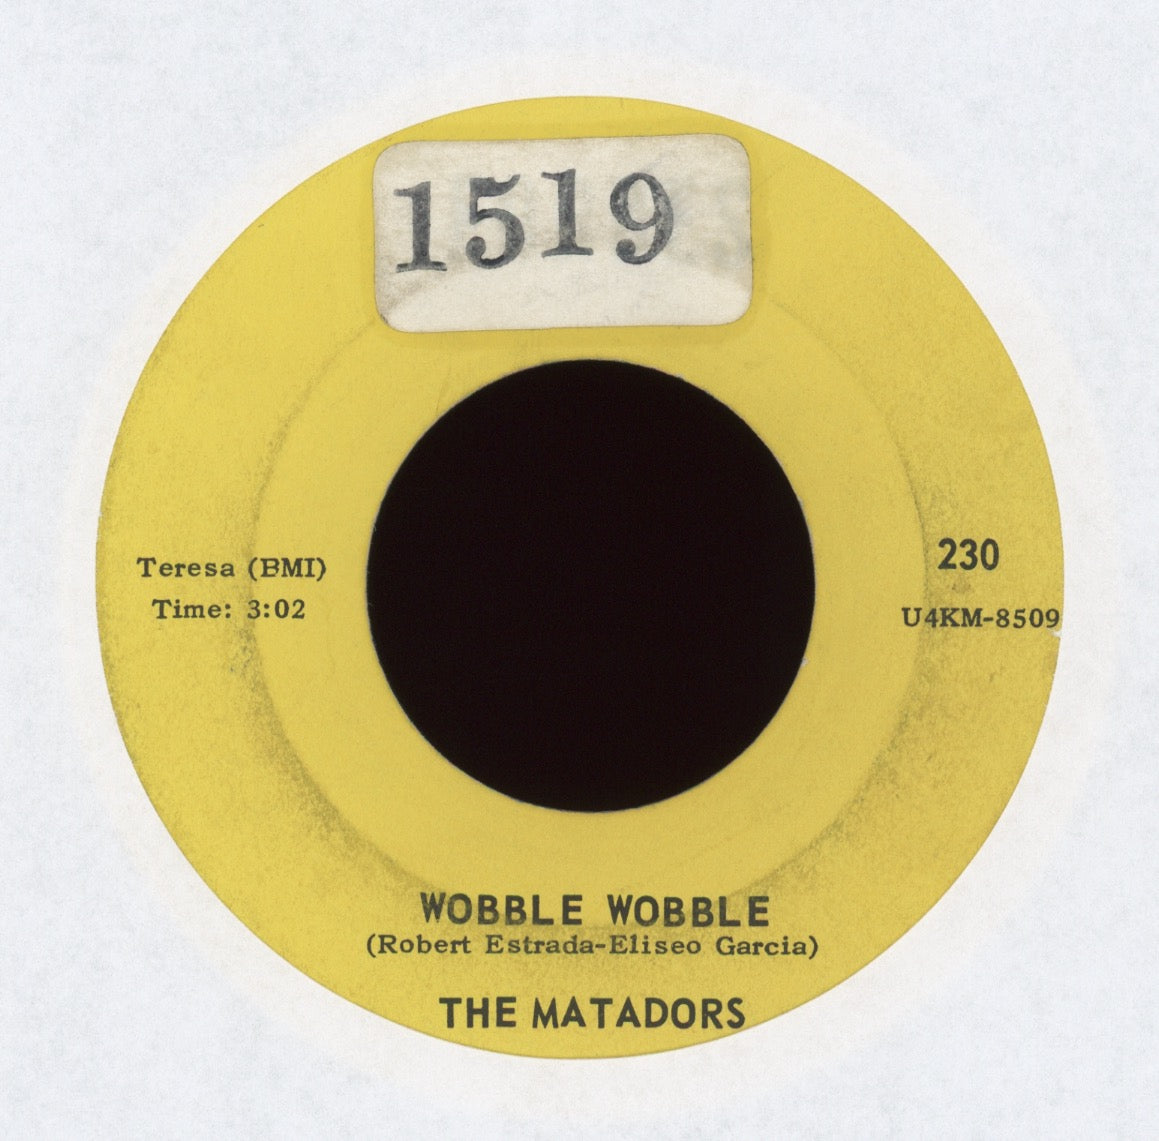 The Matadors - Wobble Wobble on Forbes